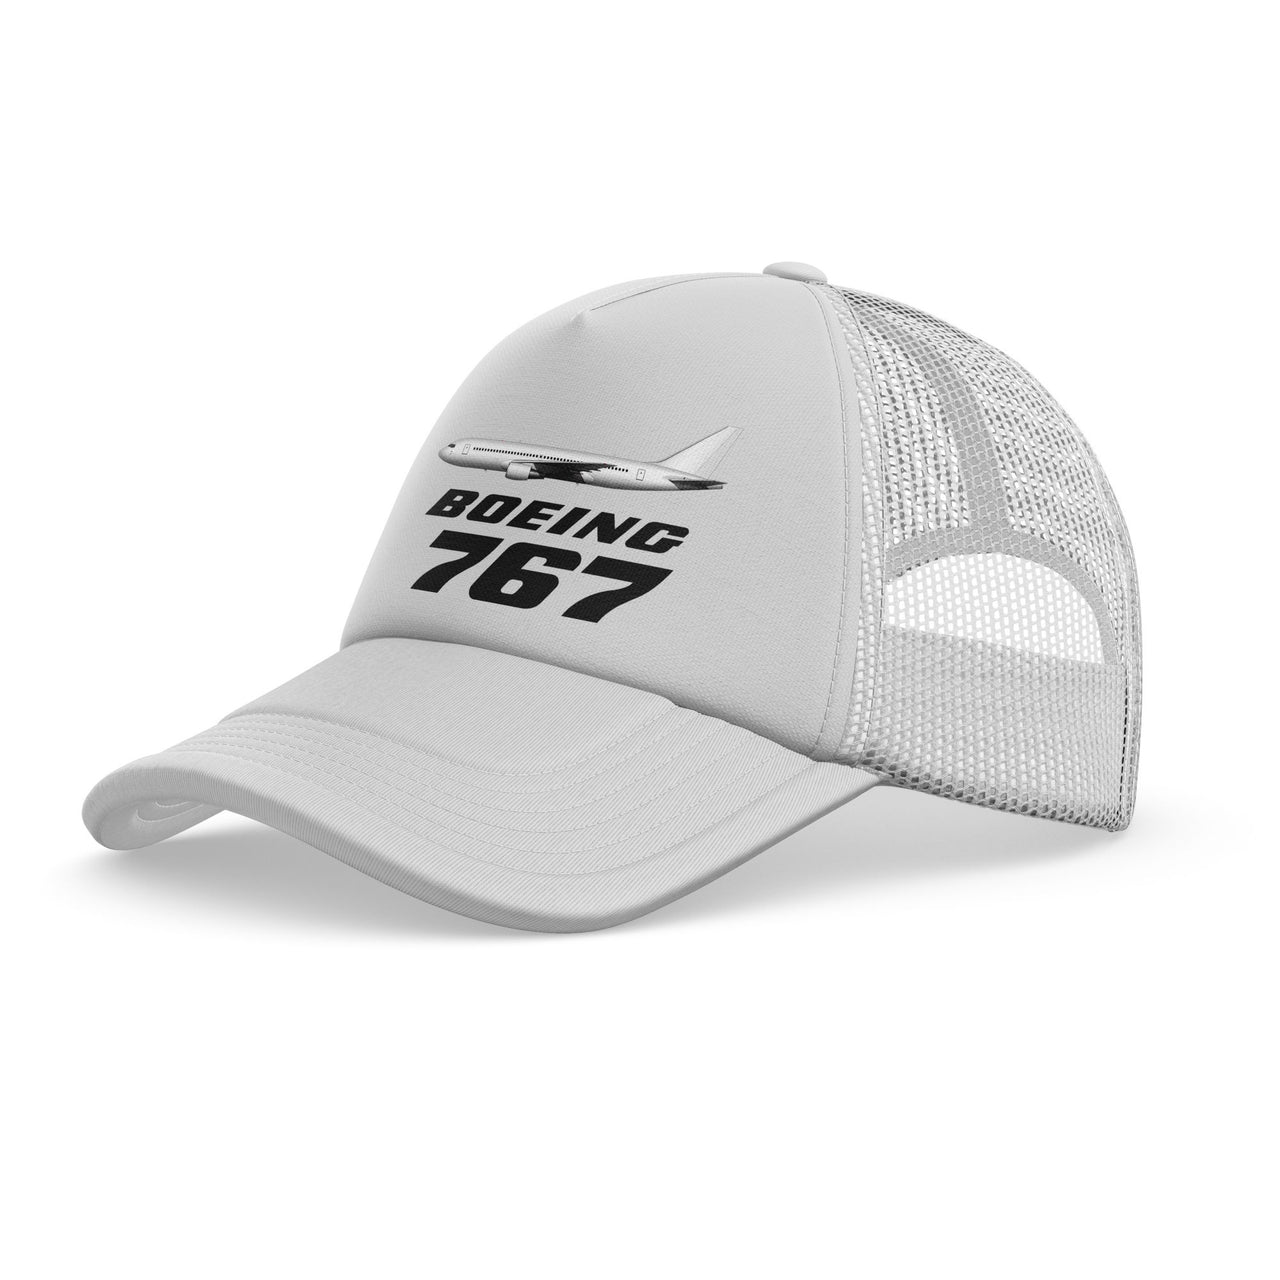 The Boeing 767 Designed Trucker Caps & Hats